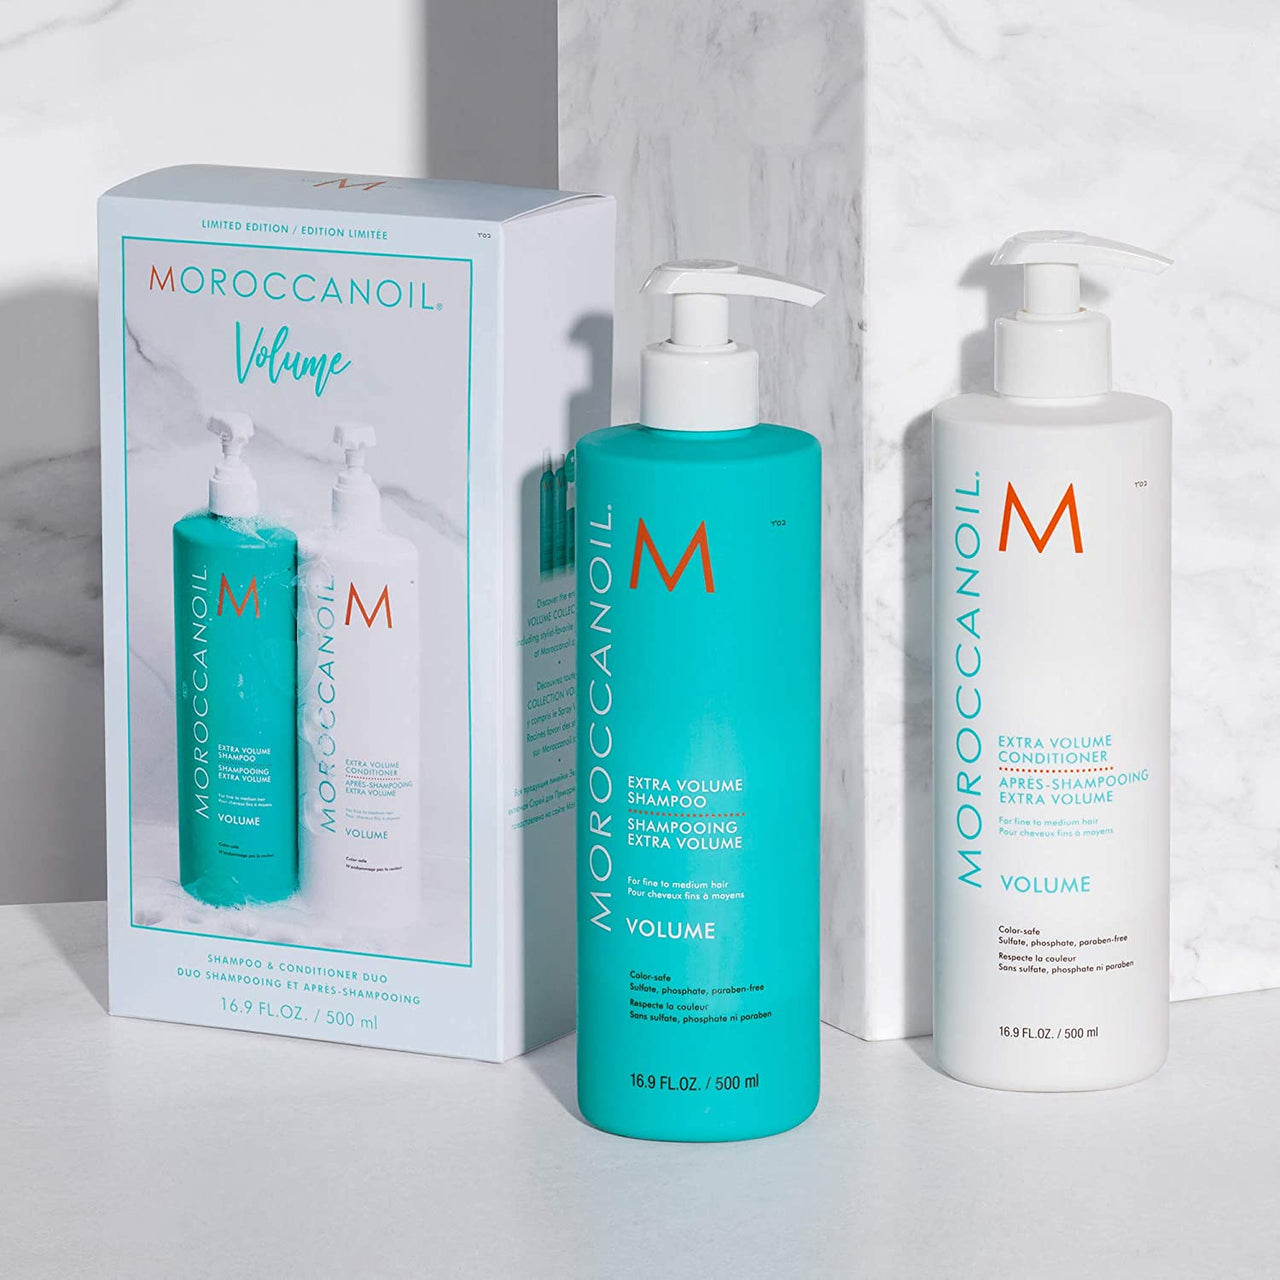 MOROCCANOIL_Volume shampoo & conditioner DUO set limited edition_Cosmetic World